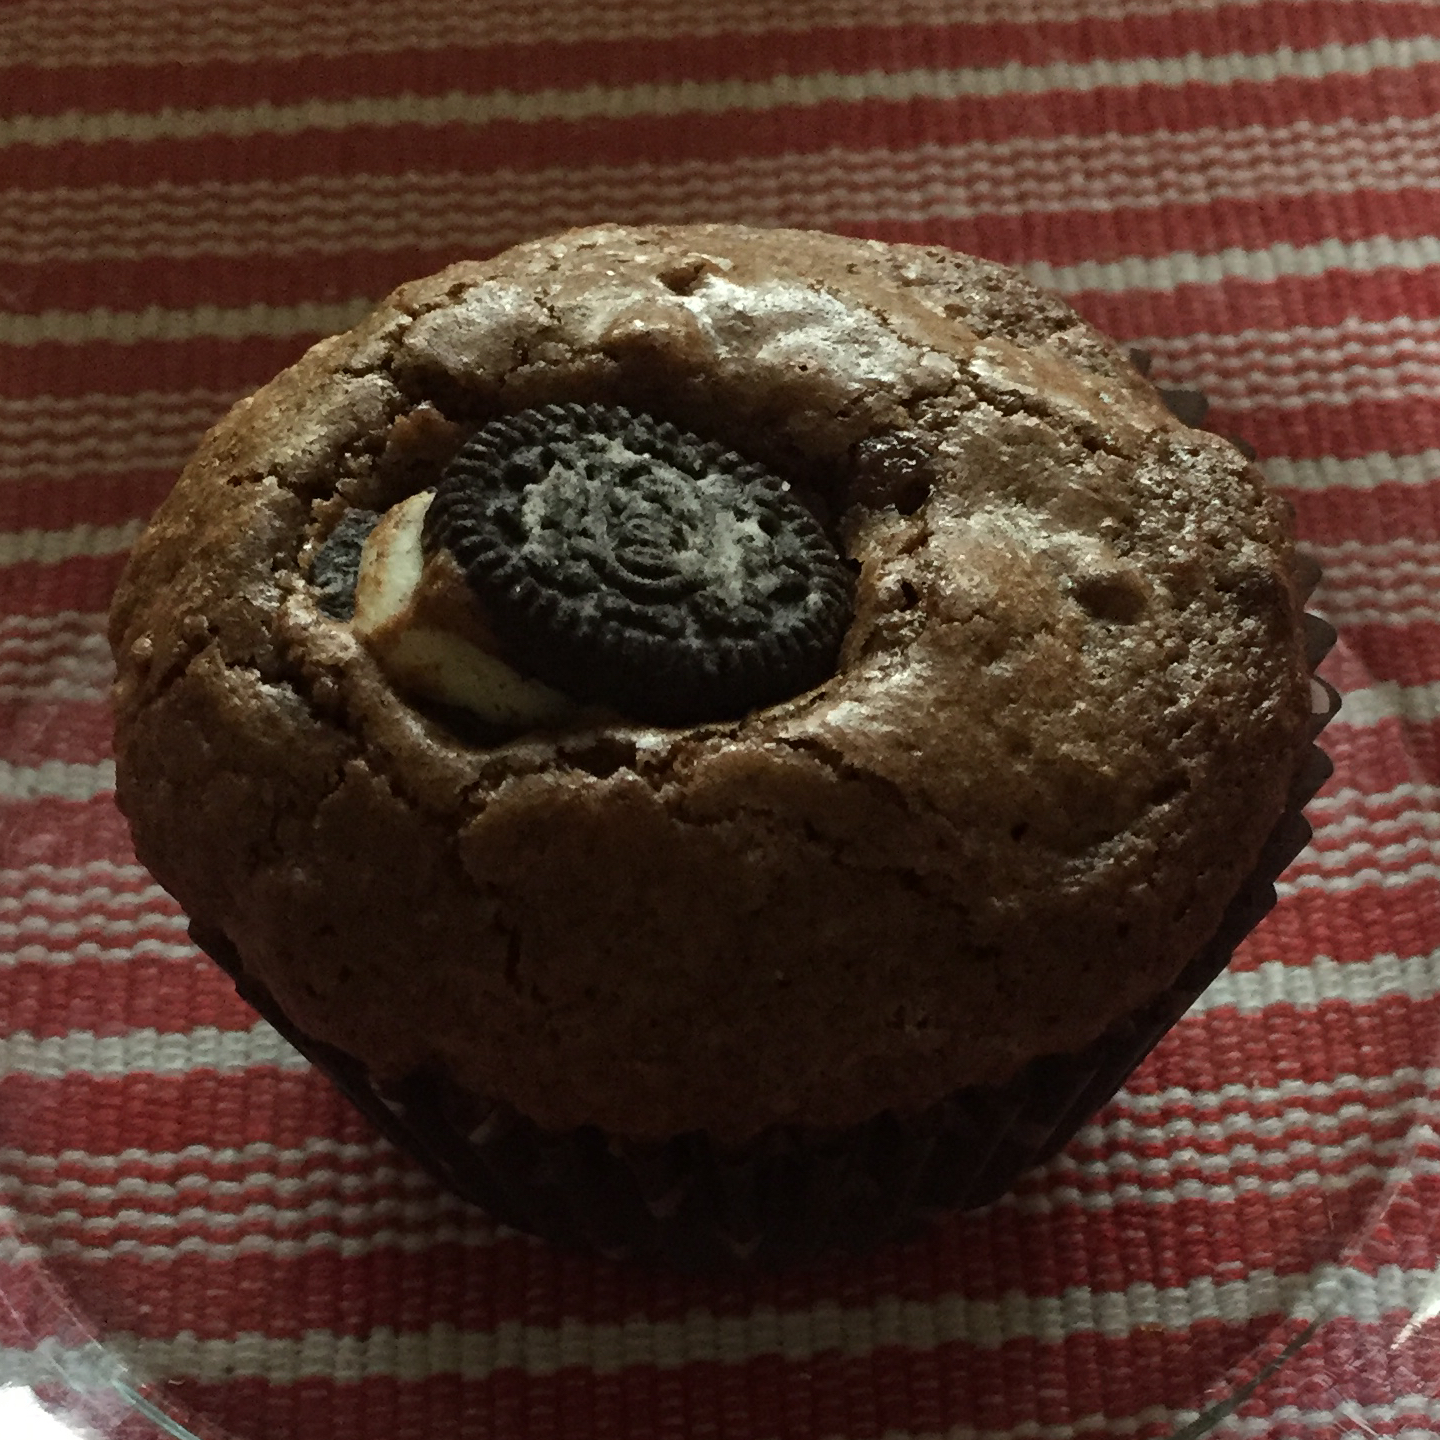 Irresistible Oreo®-Stuffed Brownies: A Dess